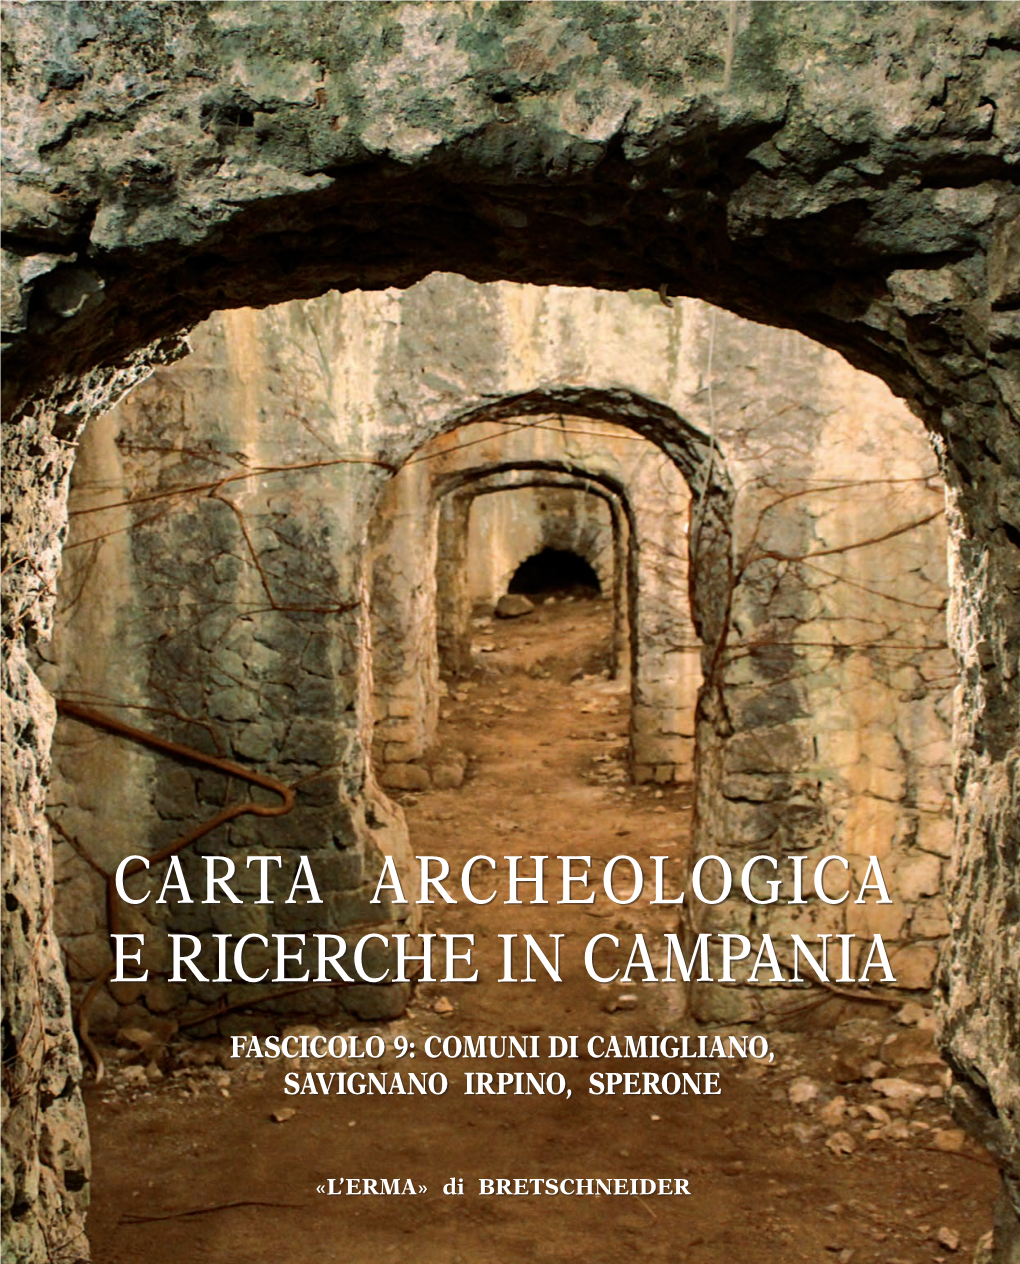 Carta Archeologica E Ricerche in Campania E Ricerche Archeologica Carta E Ricerche in Campania